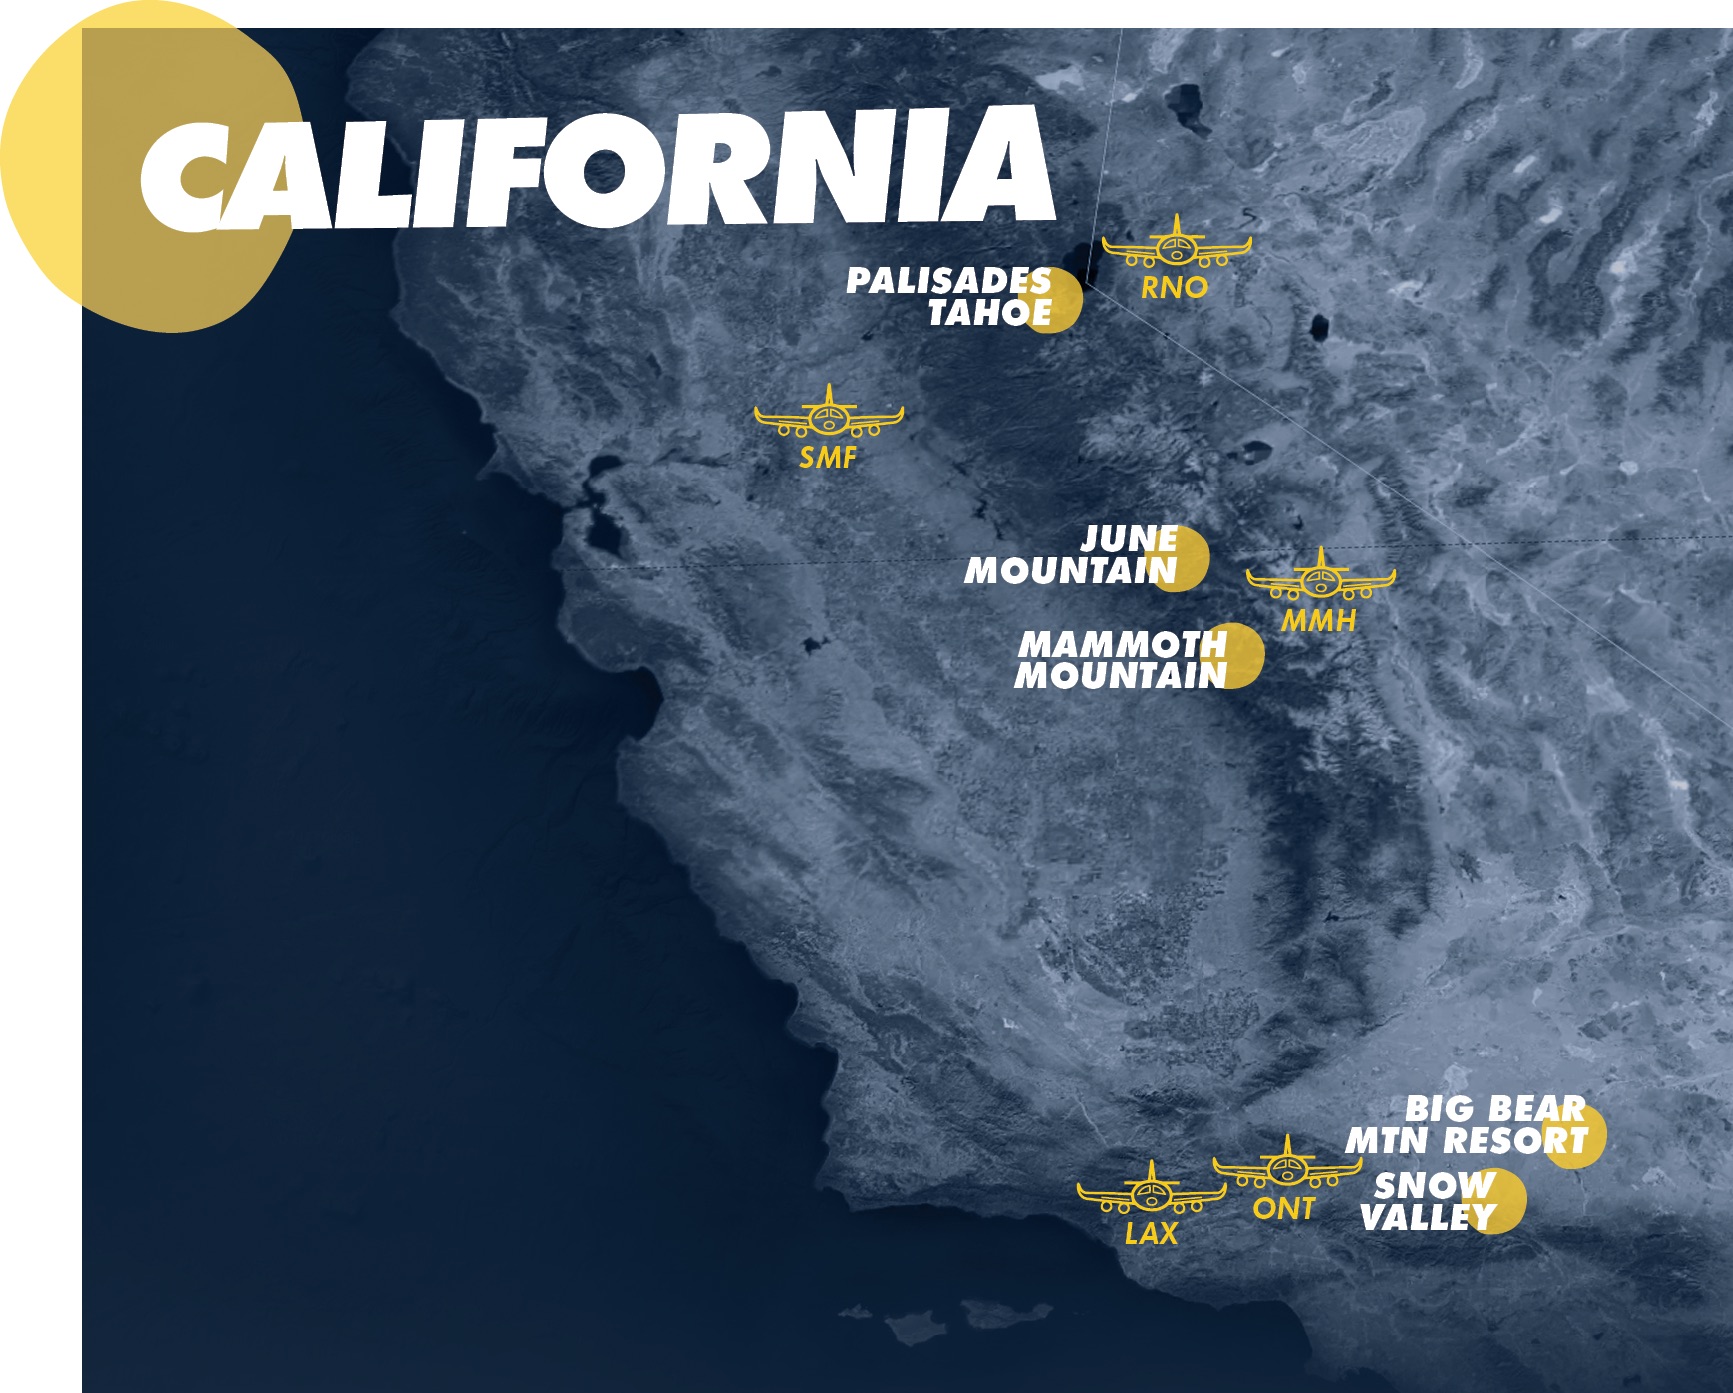 Ikon Pass destinations in California